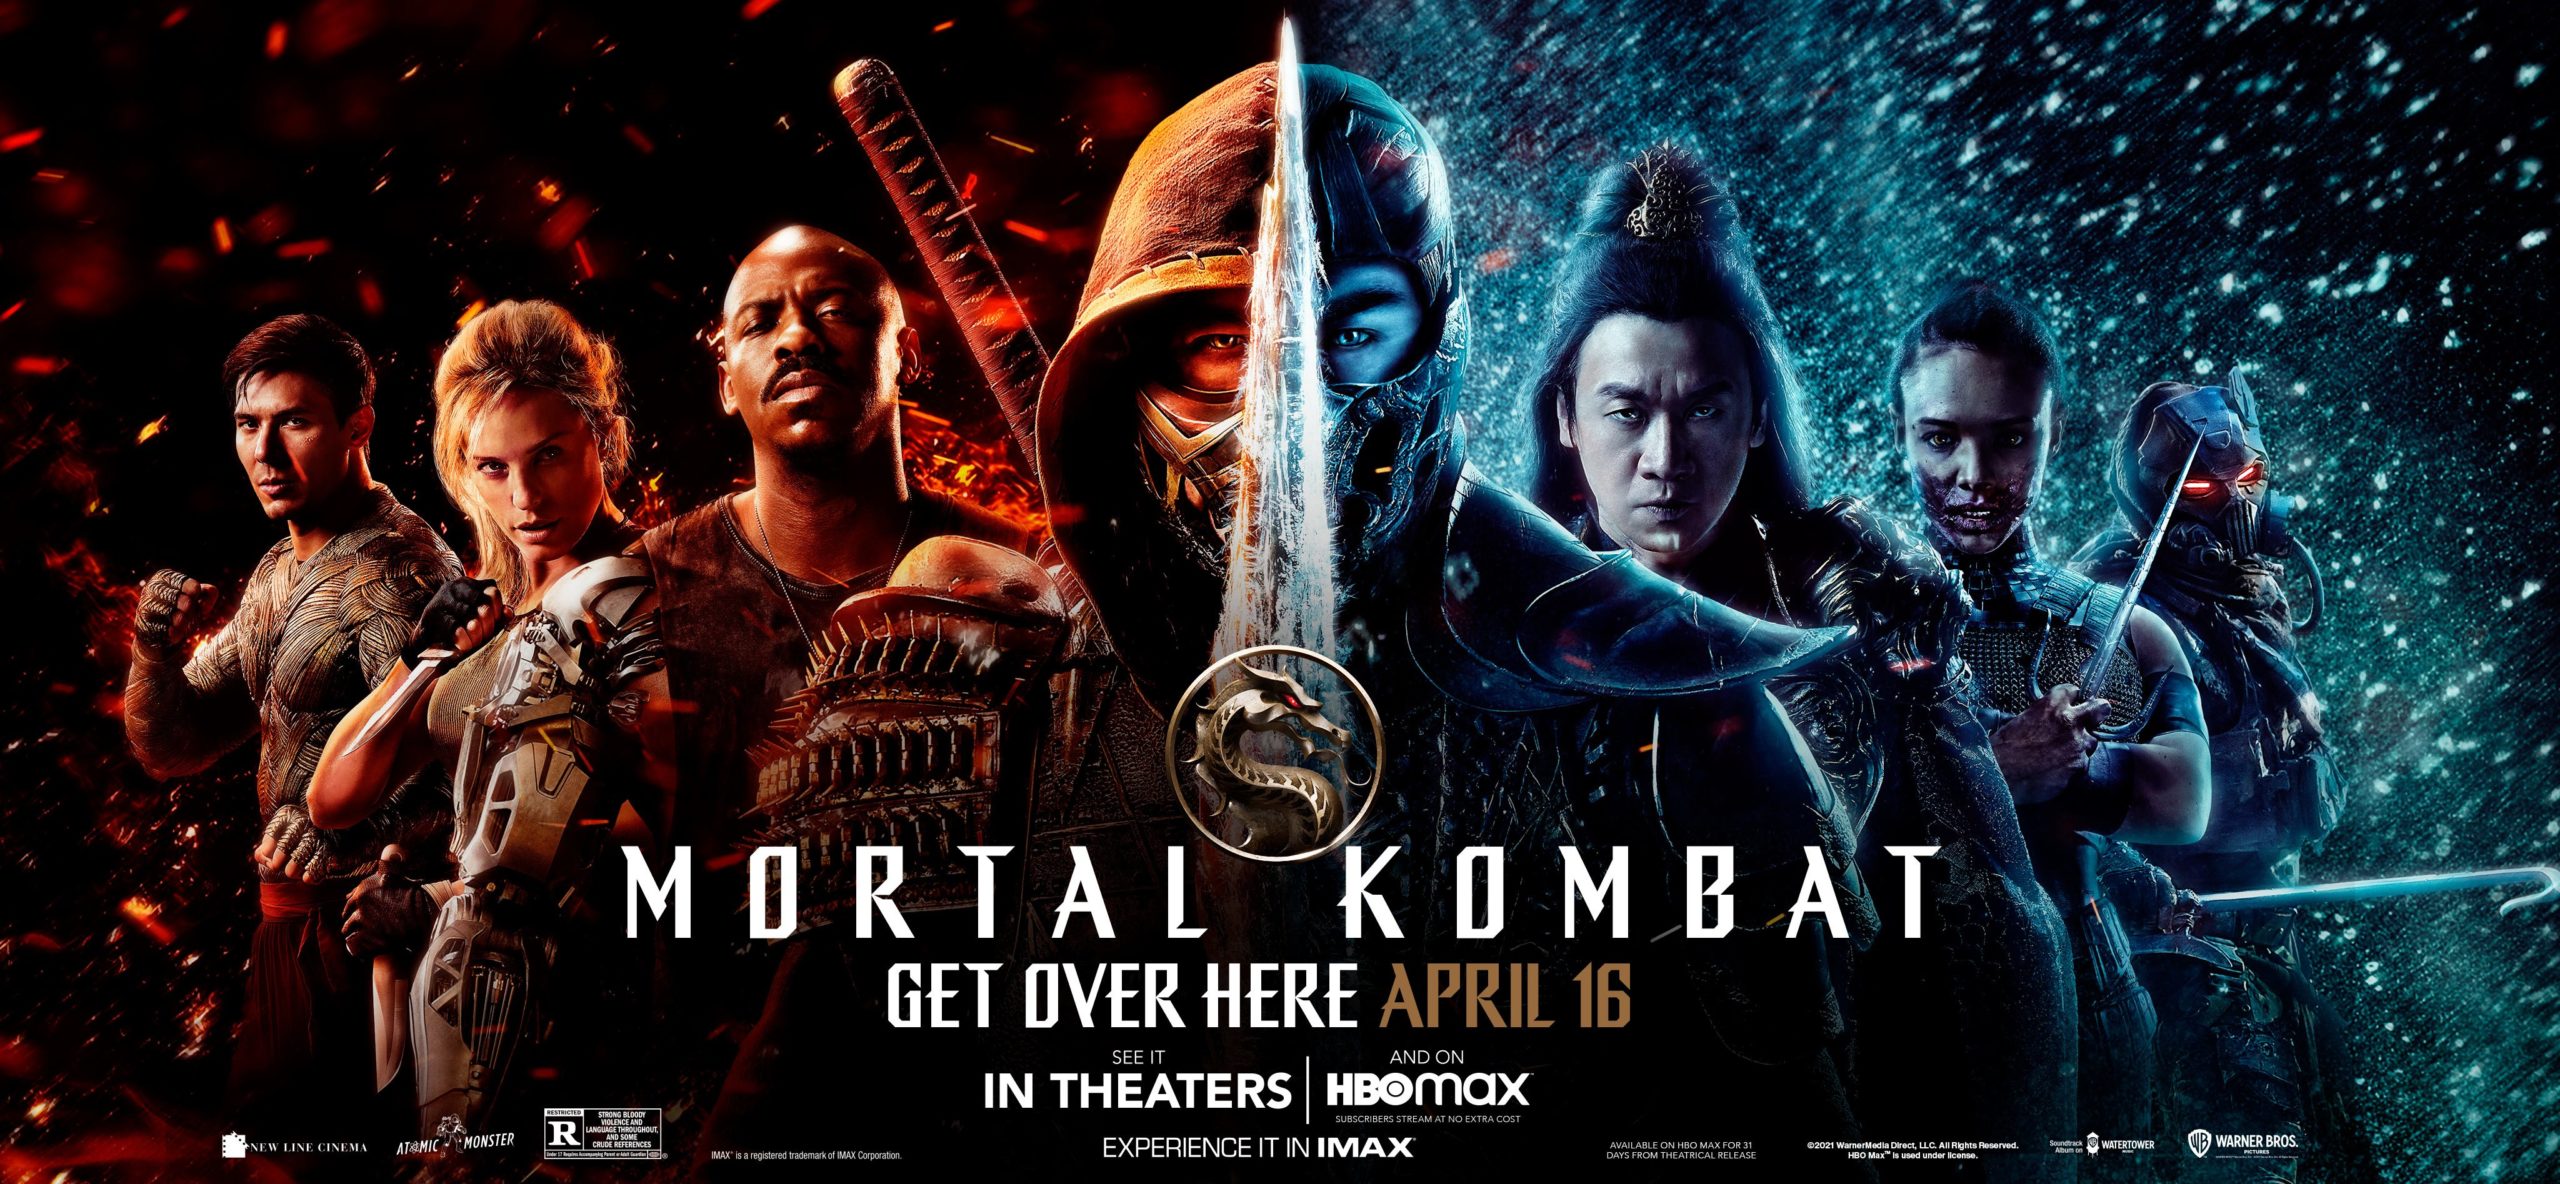 Mortal Kombat, Nobody, The Croods Release Date Spoilers Character Names